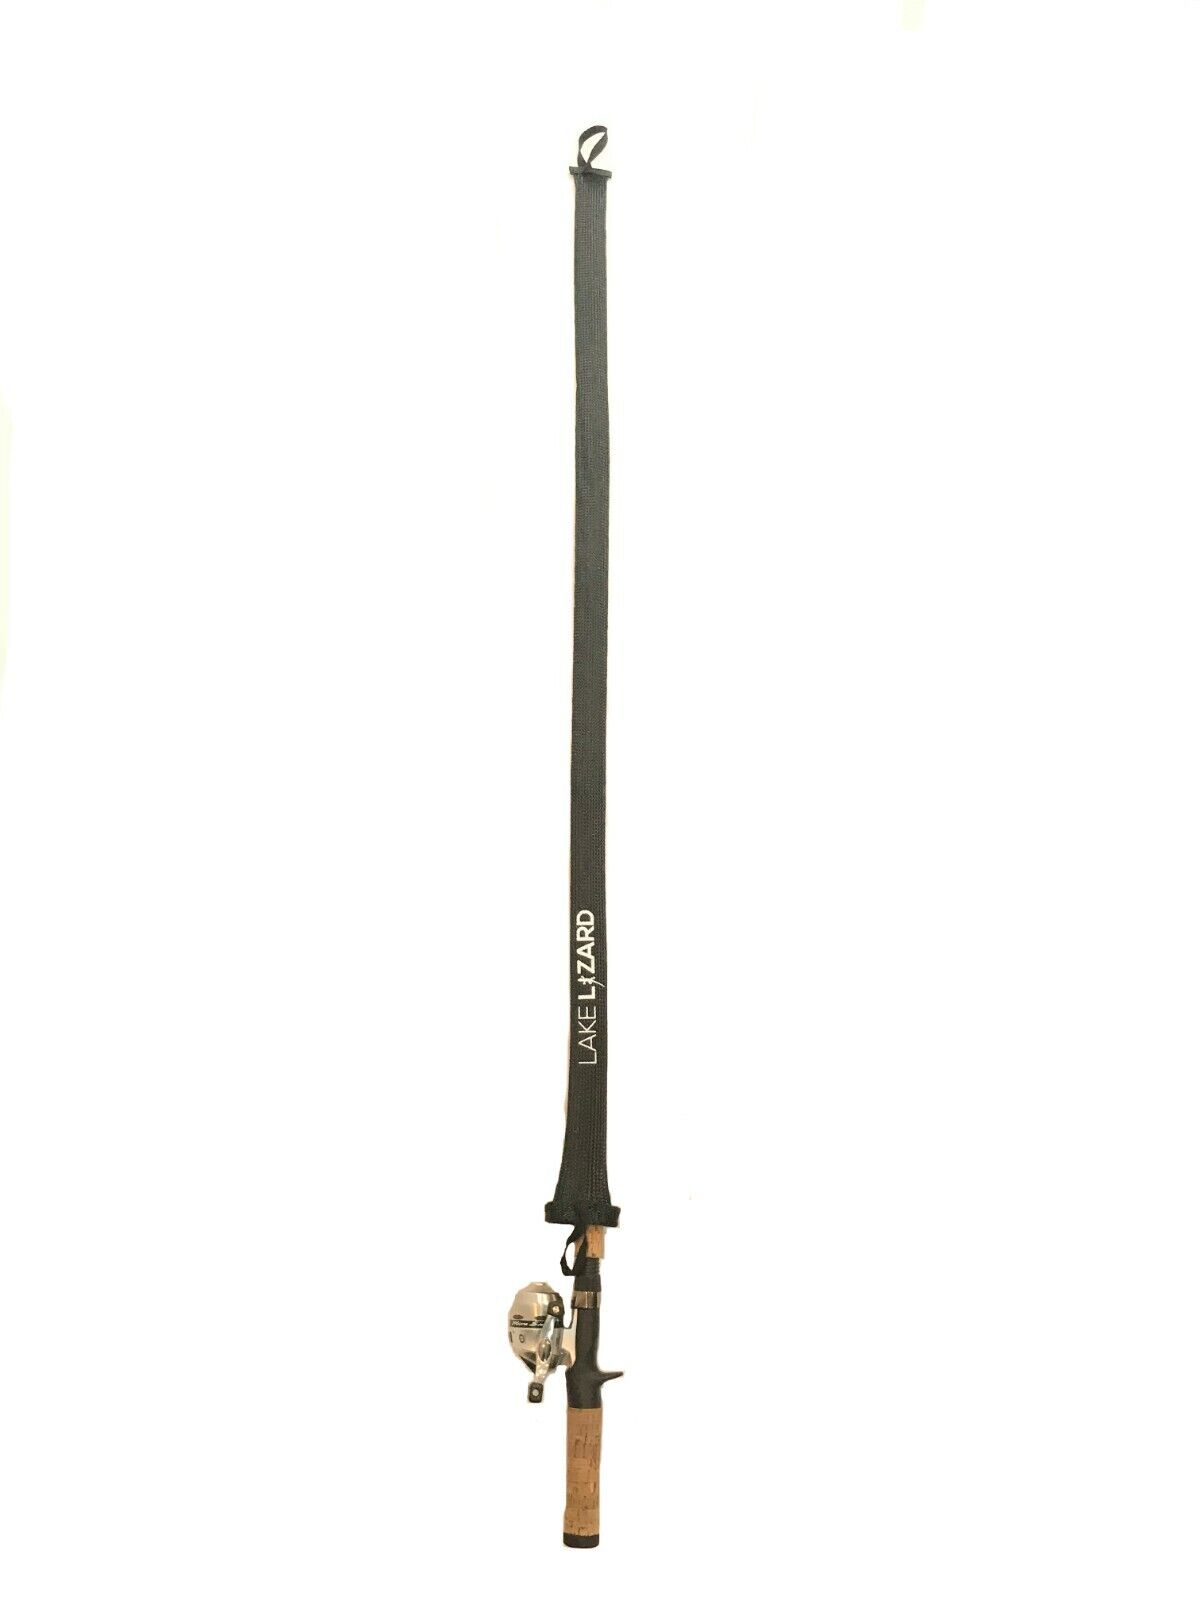 4 Pack Fishing Rod sleeve - Ultra Light / Crappie Pole / Ice Fishing Rod Lake Lizard Does Not Apply - фотография #3